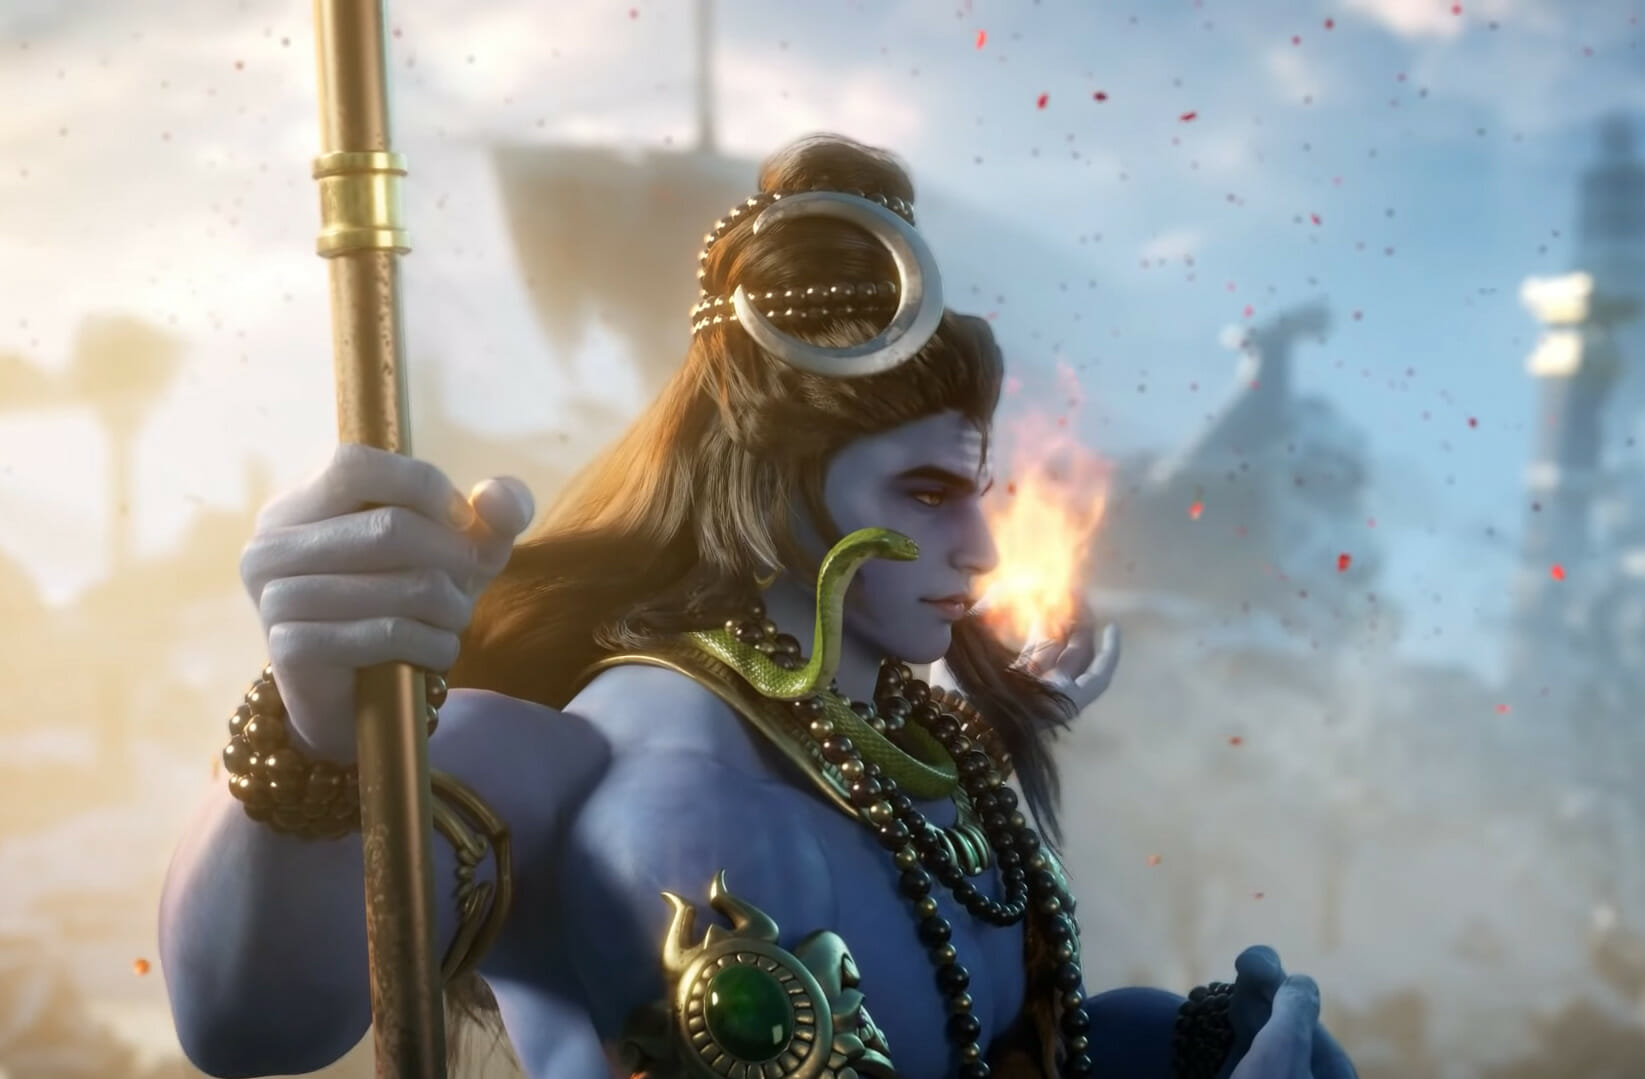 Is Shiva male or female